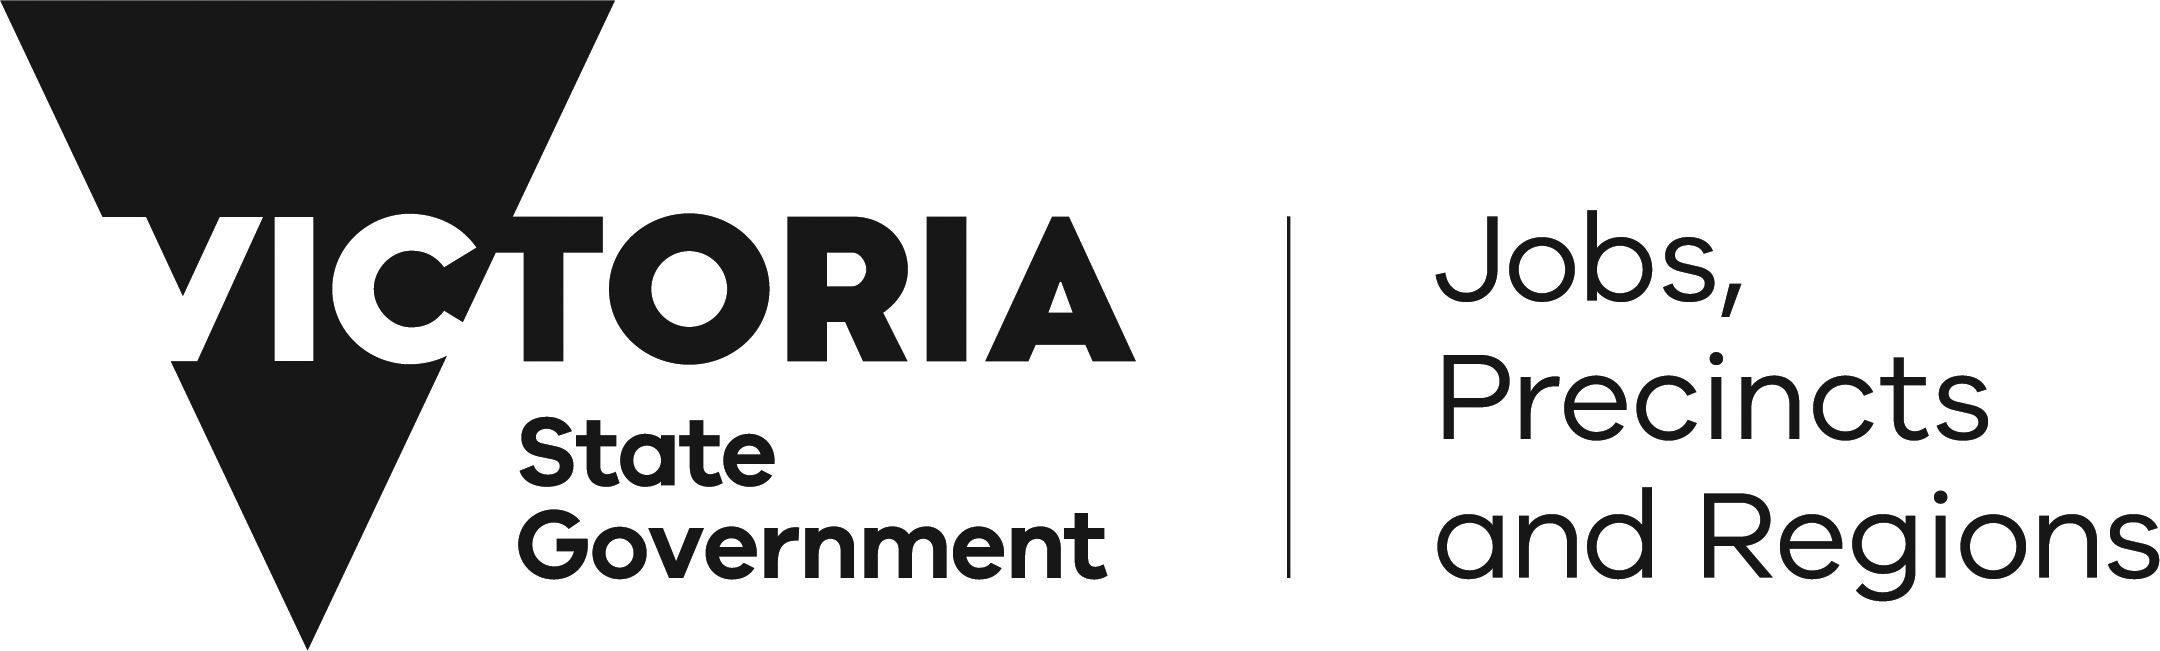 Department of Jobs, Precincts and Regions (DJPR) logo